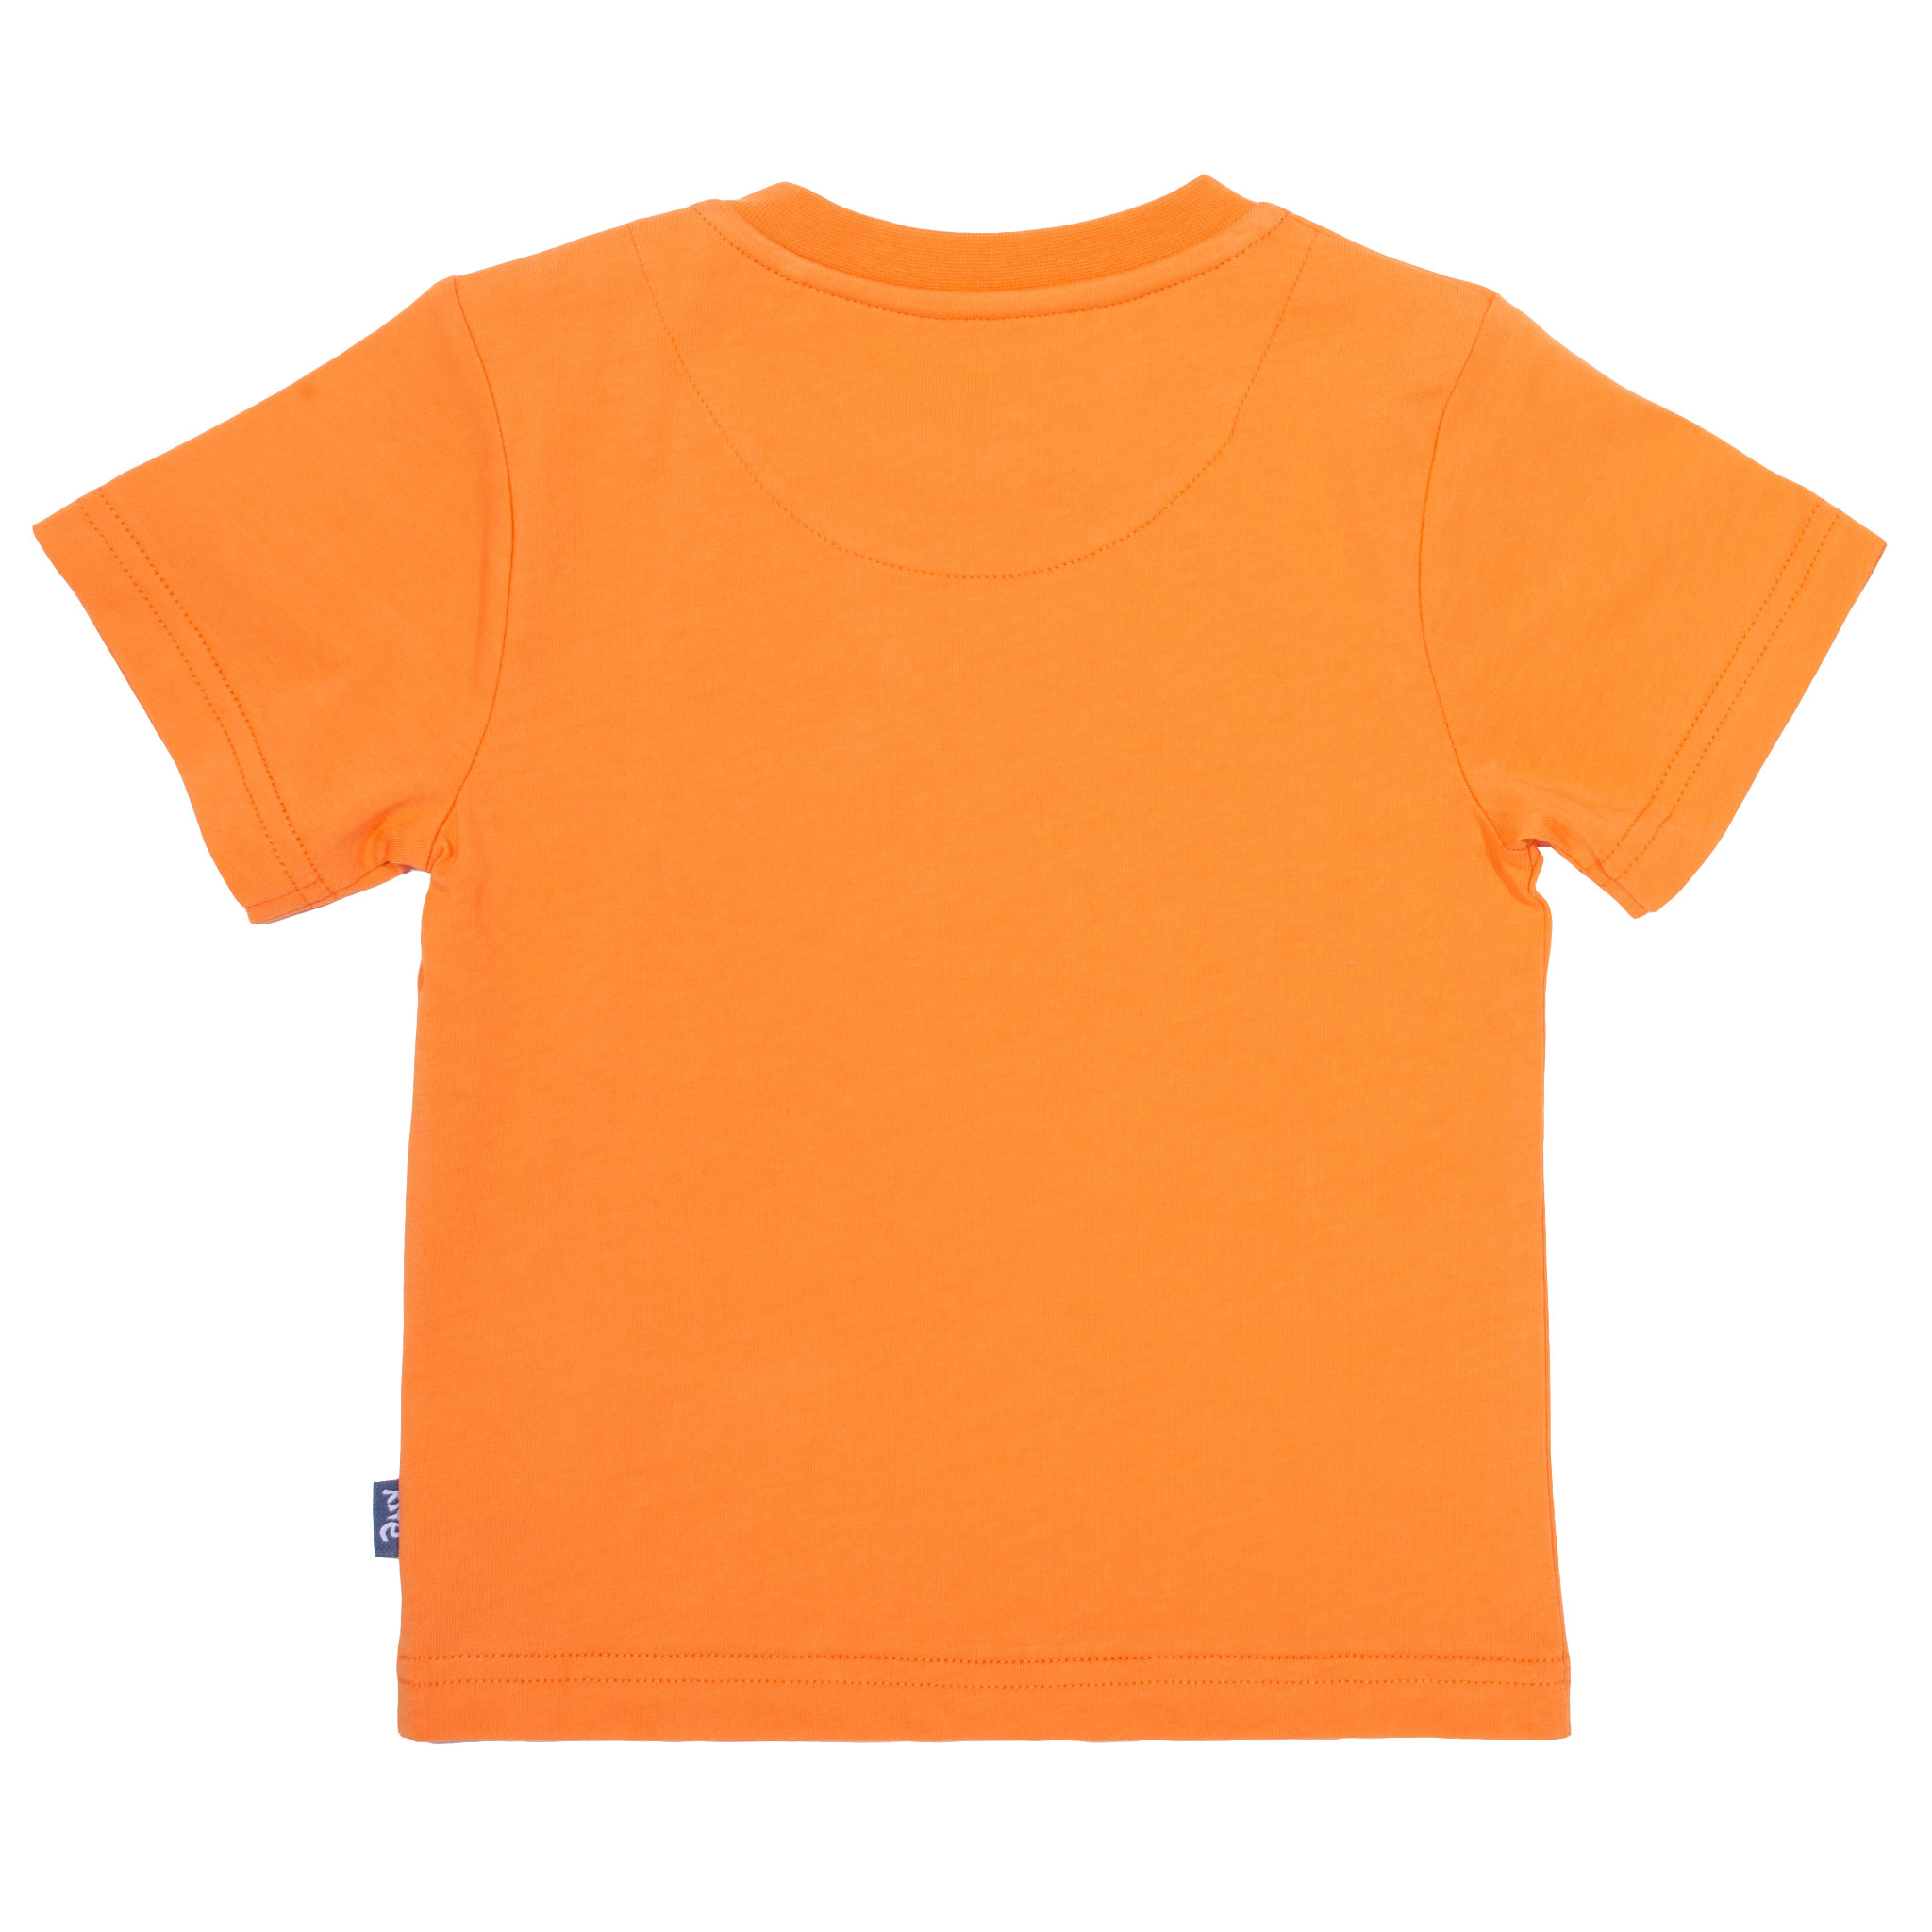 Kurzarm-Shirt Terrific Tiger in Orange